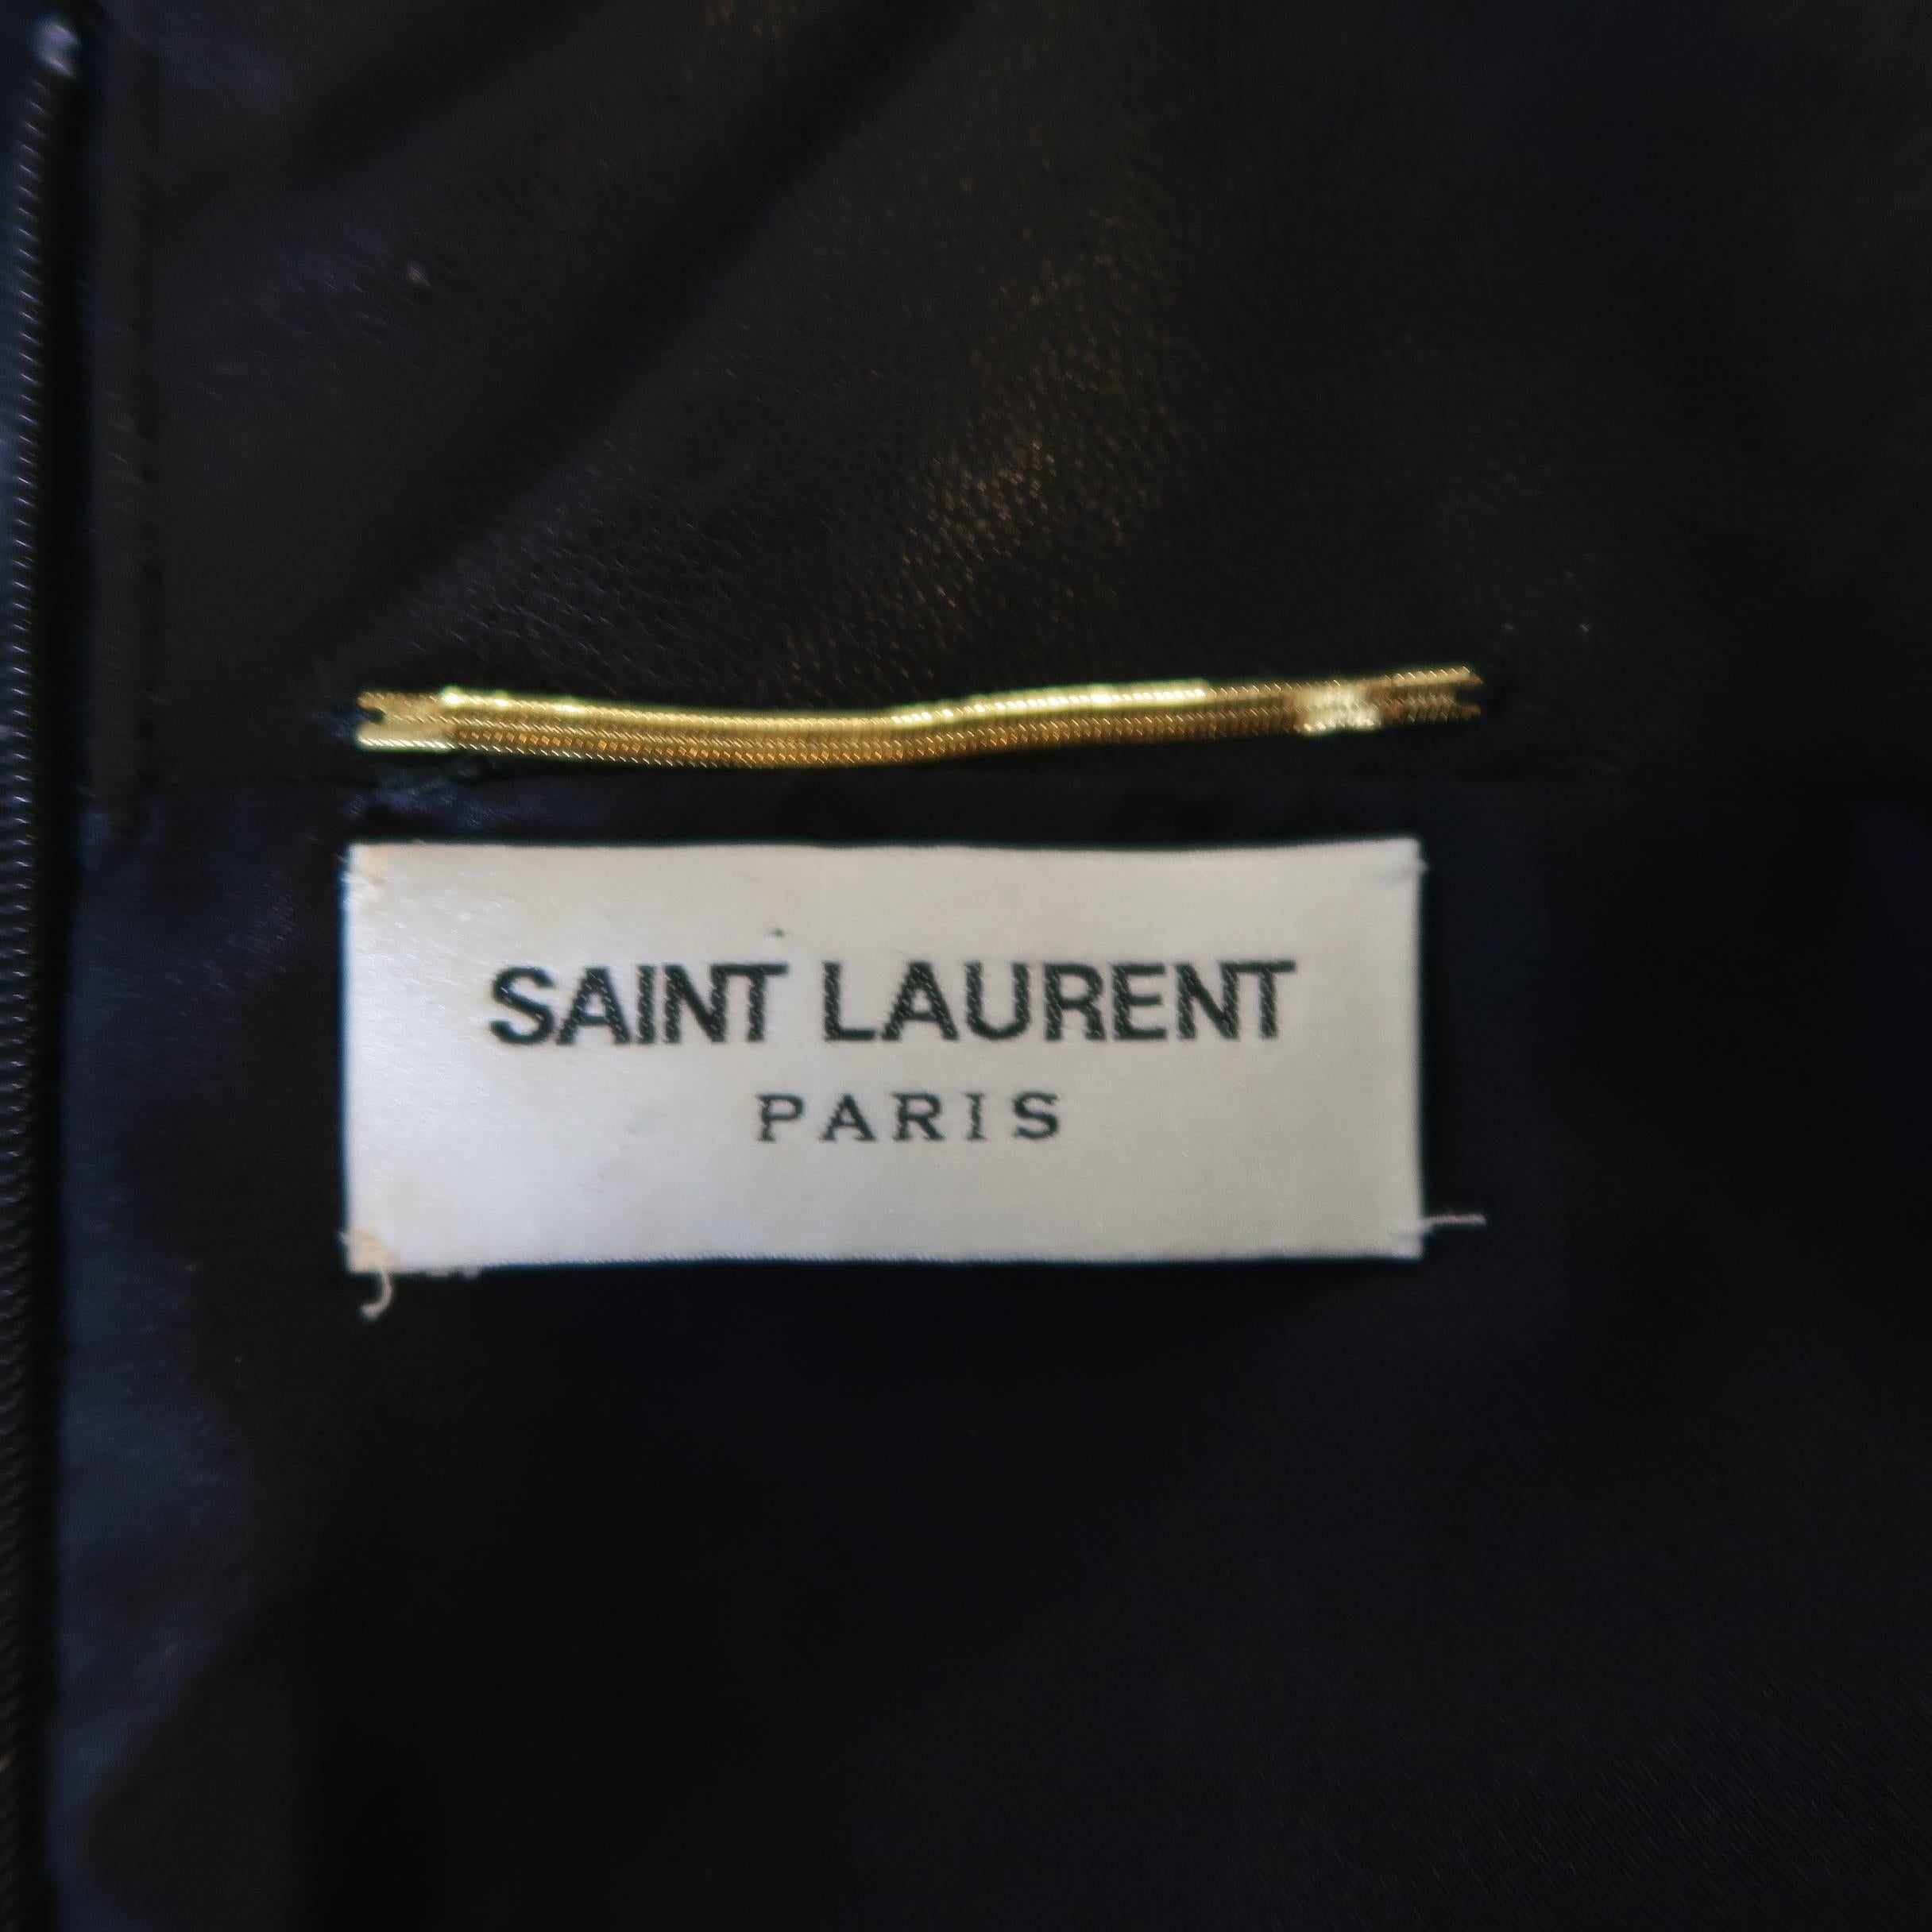 Saint Laurent by Hedi Slimane Embellished Leather Runway Dress, Fall 2013 2